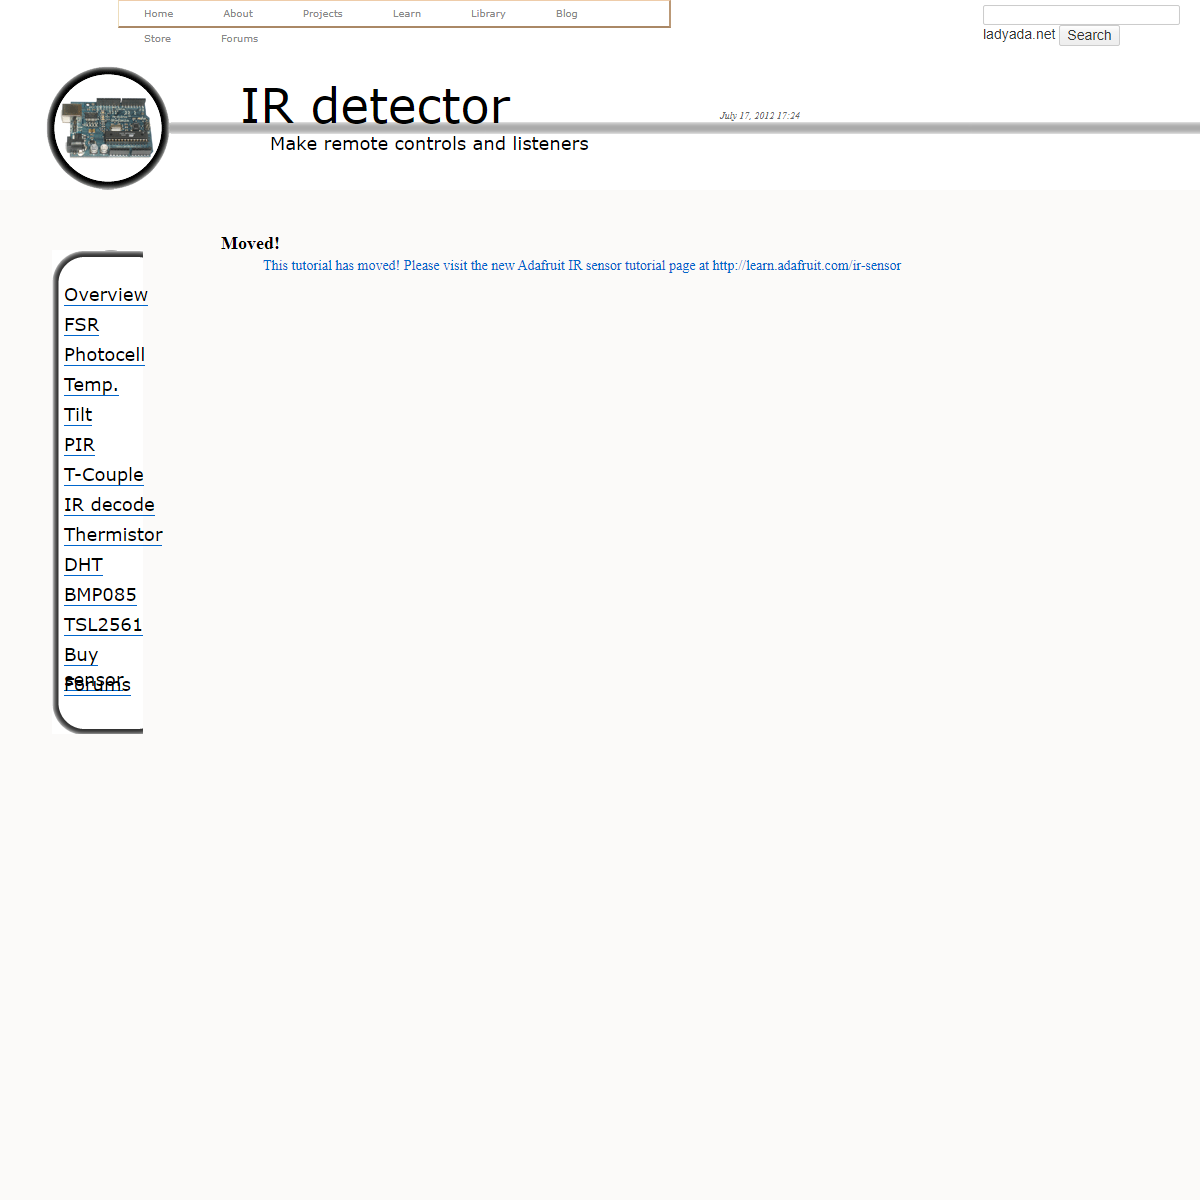 A complete backup of http://www.ladyada.net/learn/sensors/ir.html